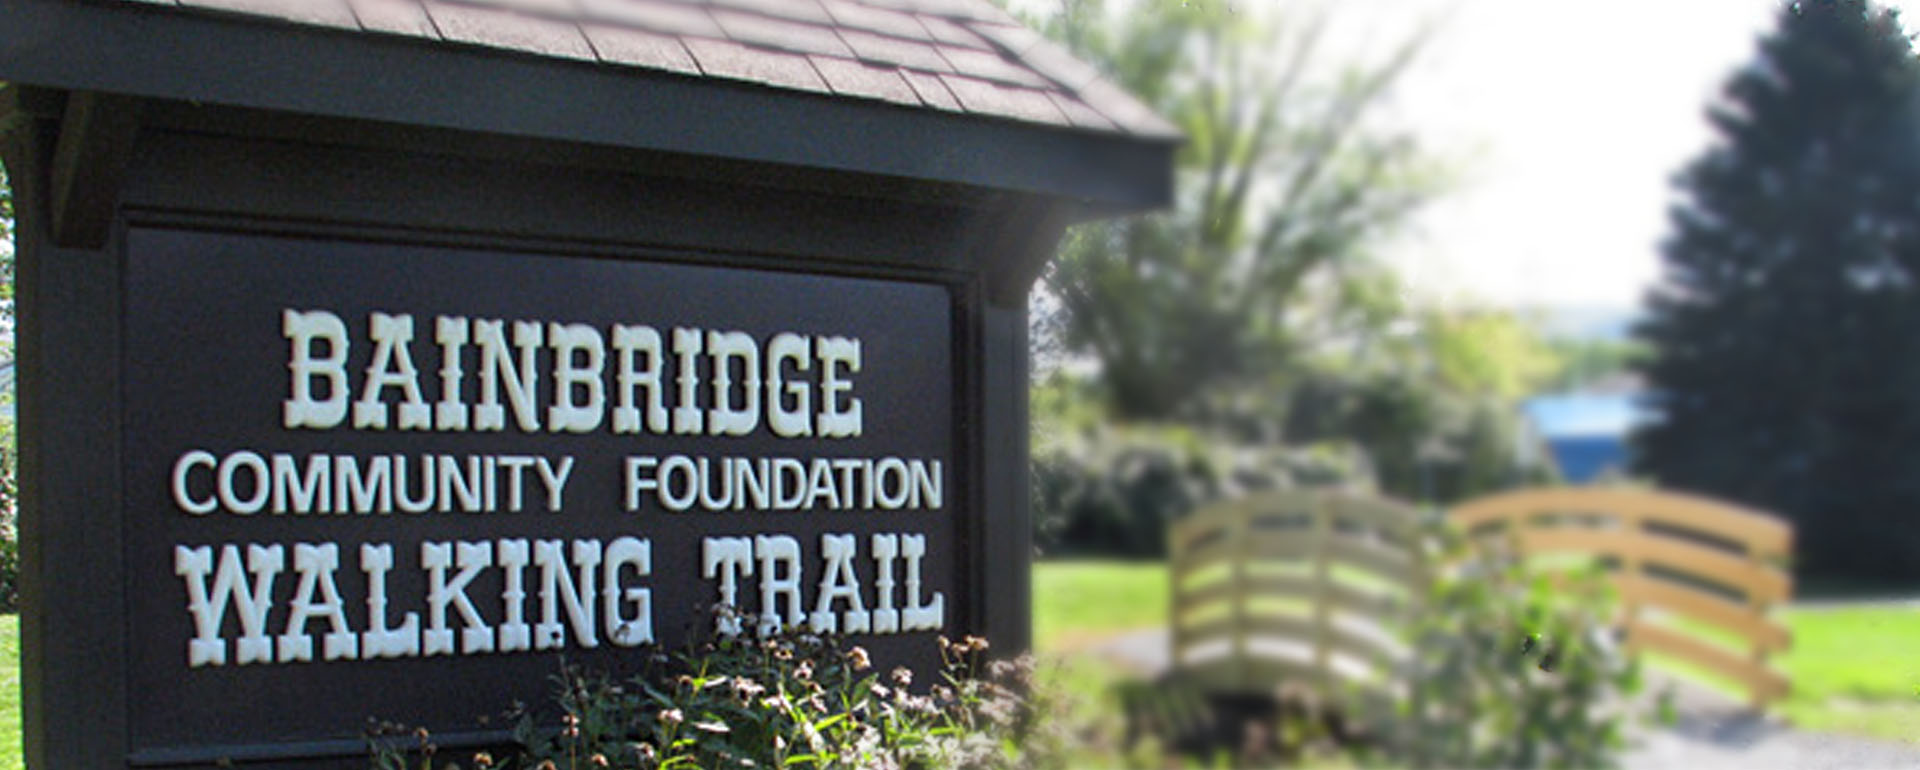 bainbridge walking trail sign